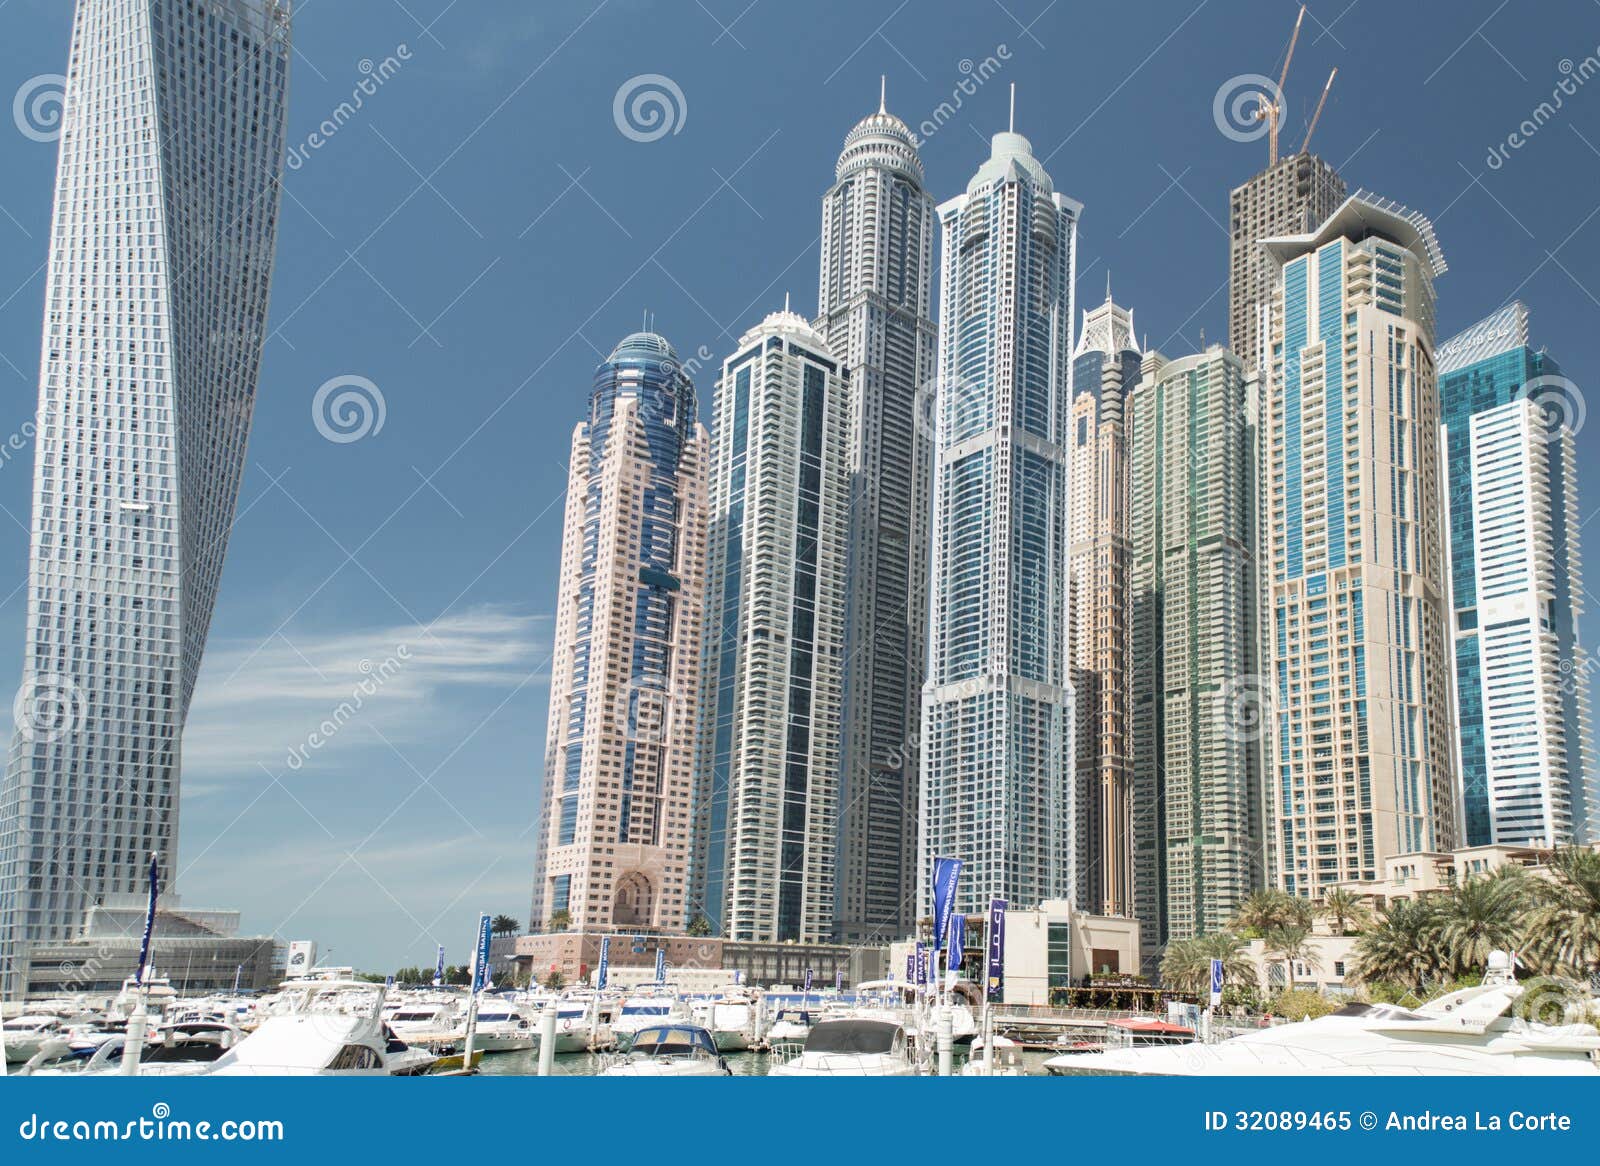 Dubai skyscrapers in Marina,United Arab Emirates. Great view of small ...